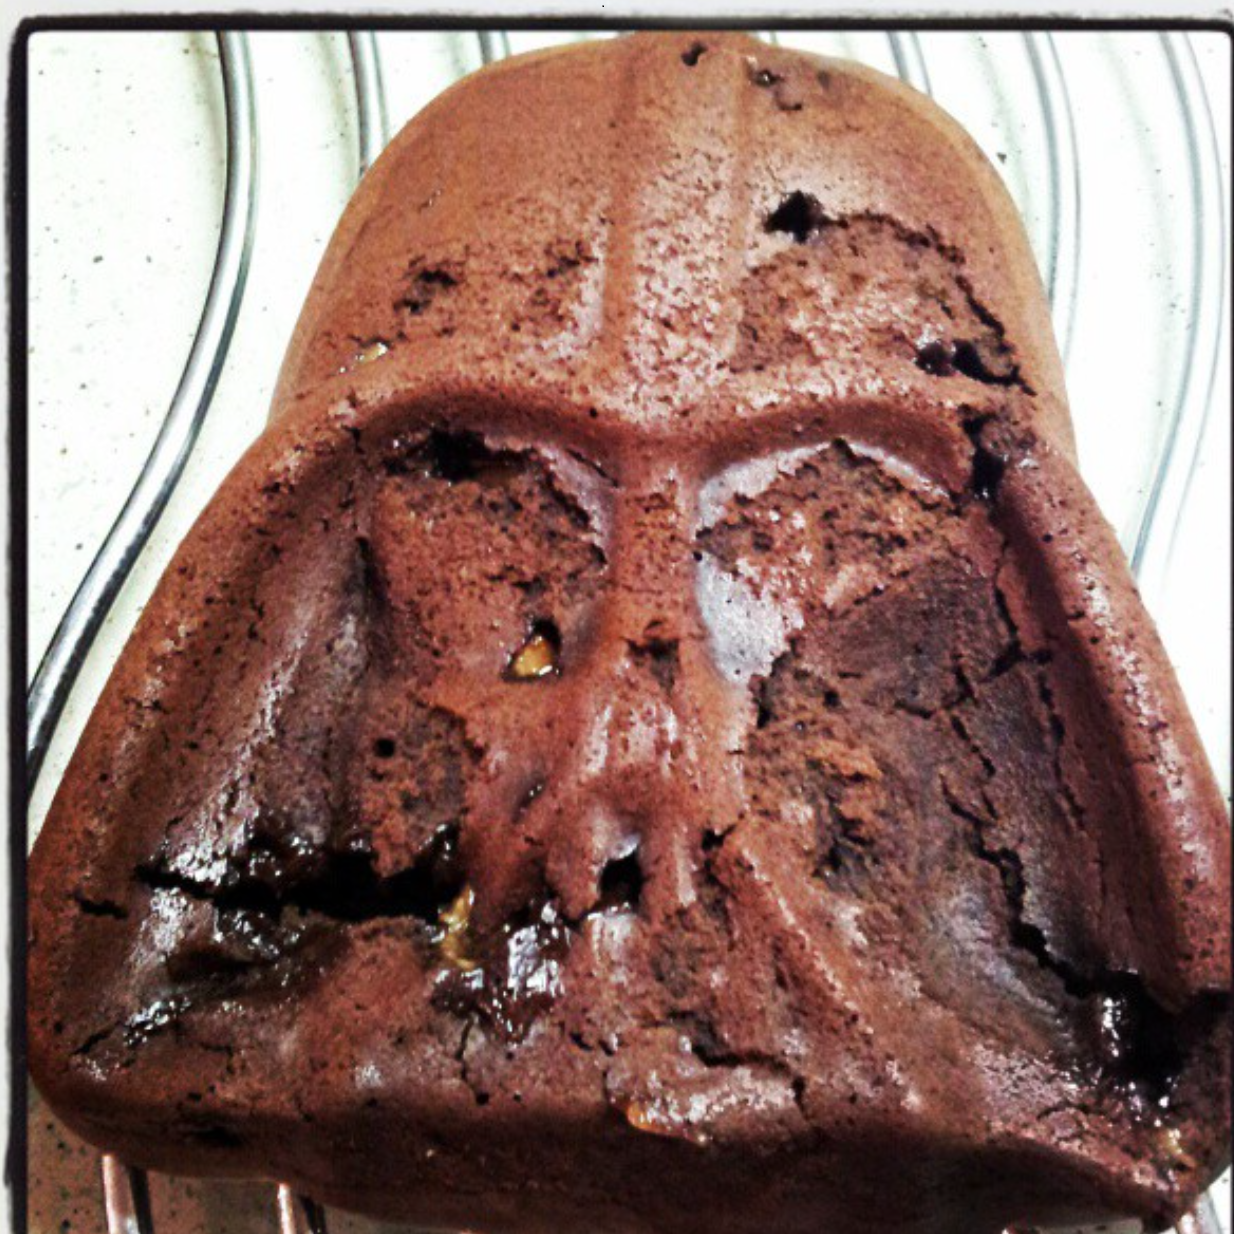 Baking Disaster 1 - Chocolate Fudge Darth Vader Cake